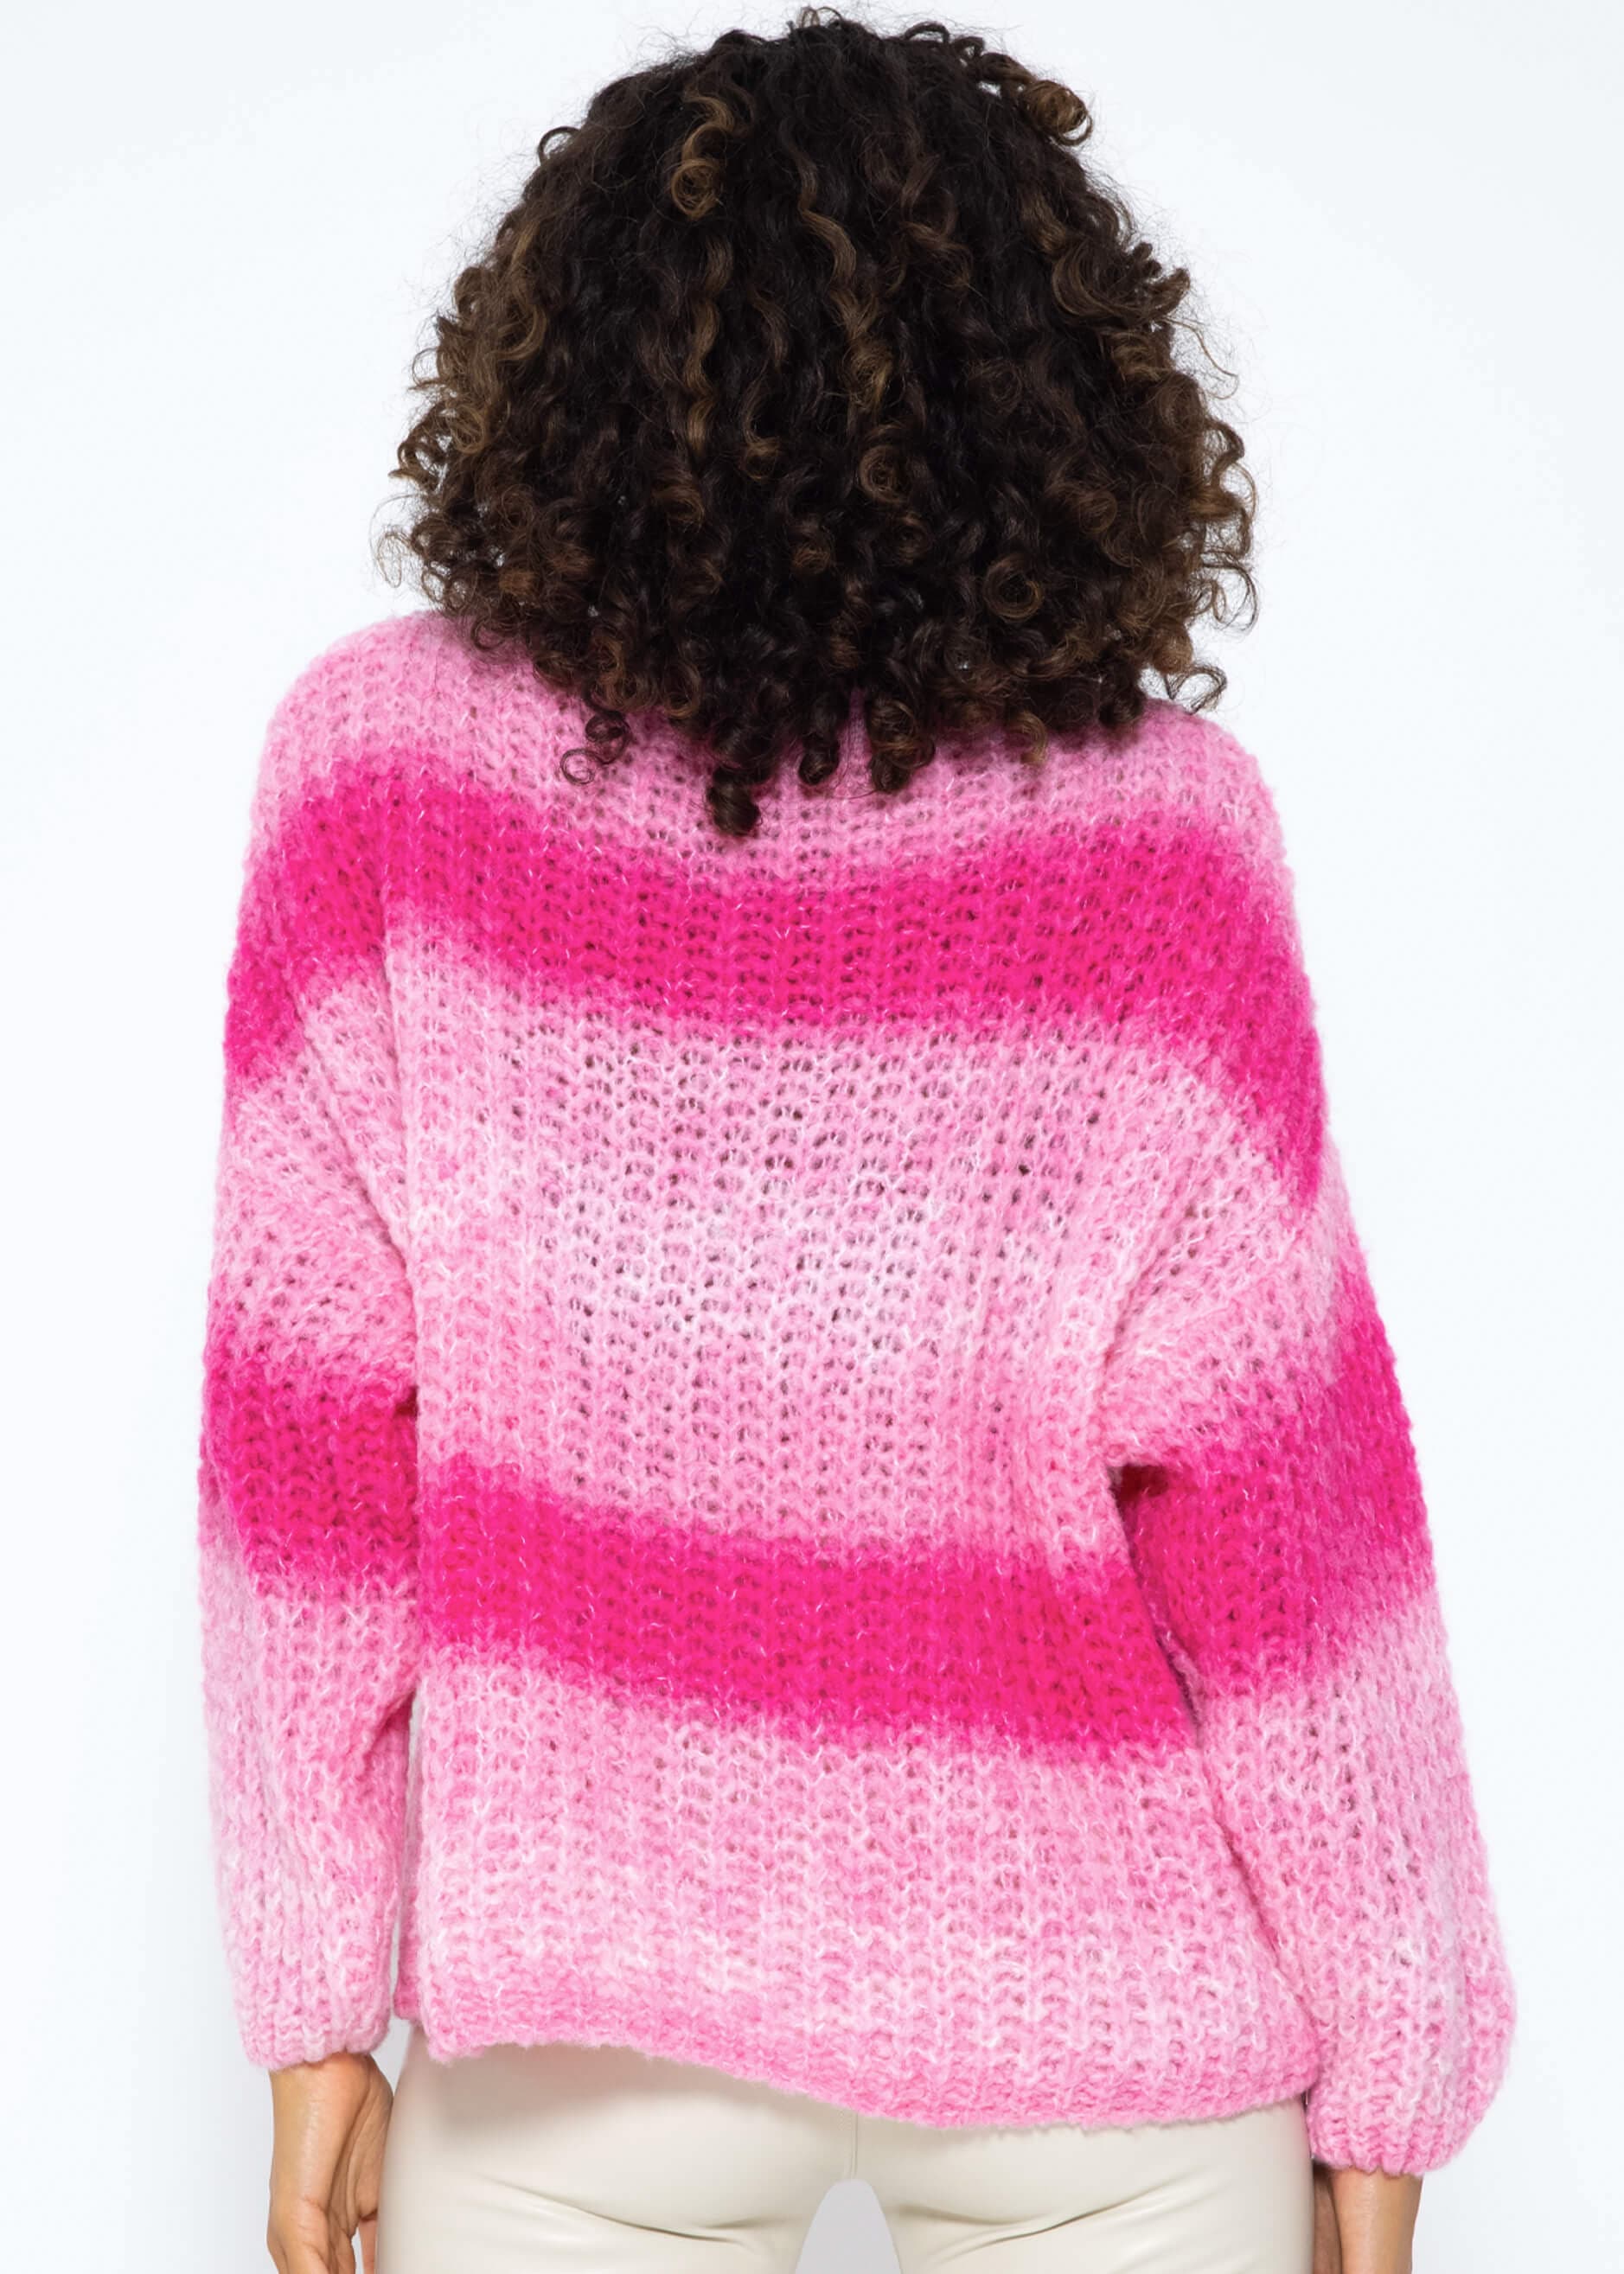 Strickpullover mit Farbverlauf - rosa SASSYCLASSY Bekleidung | | Pullover 